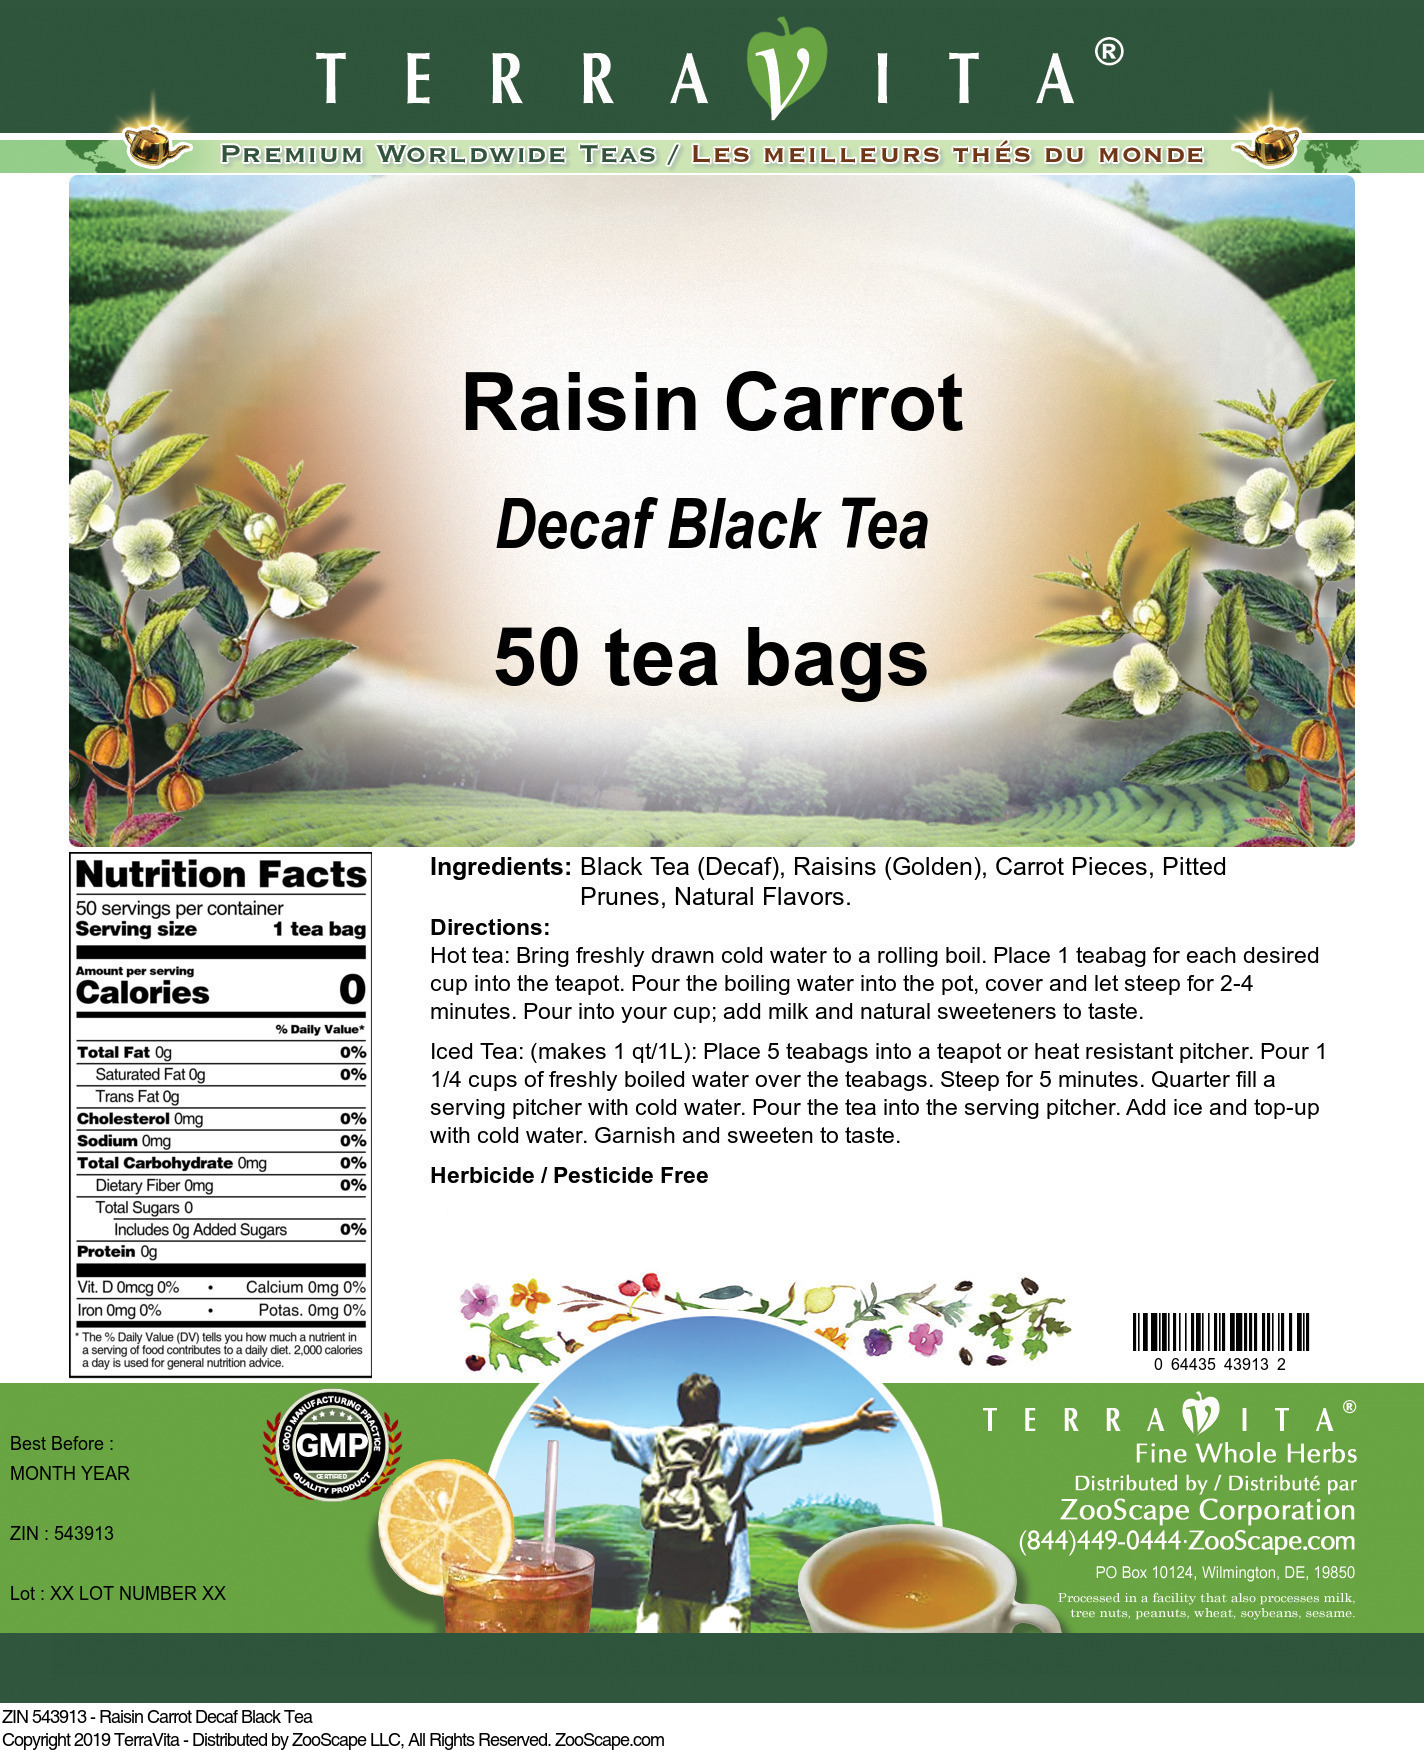 Raisin Carrot Decaf Black Tea - Label